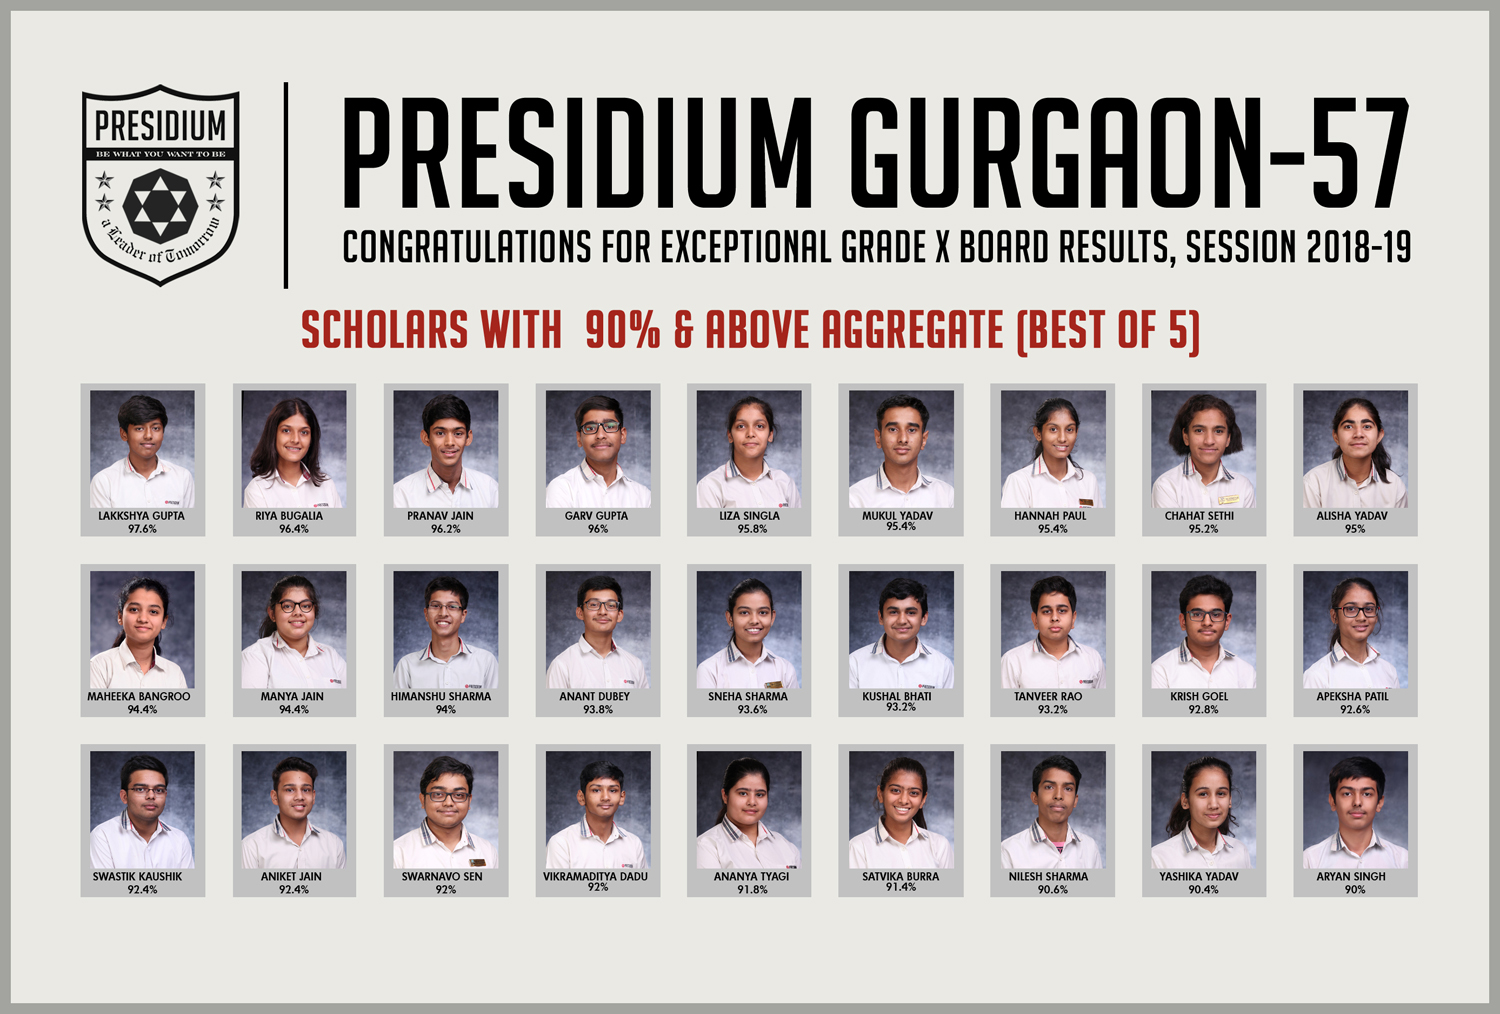 Presidium Gurgaon-57, PRESIDIANS OUTSHINE CBSE GRADE 10 RESULTS